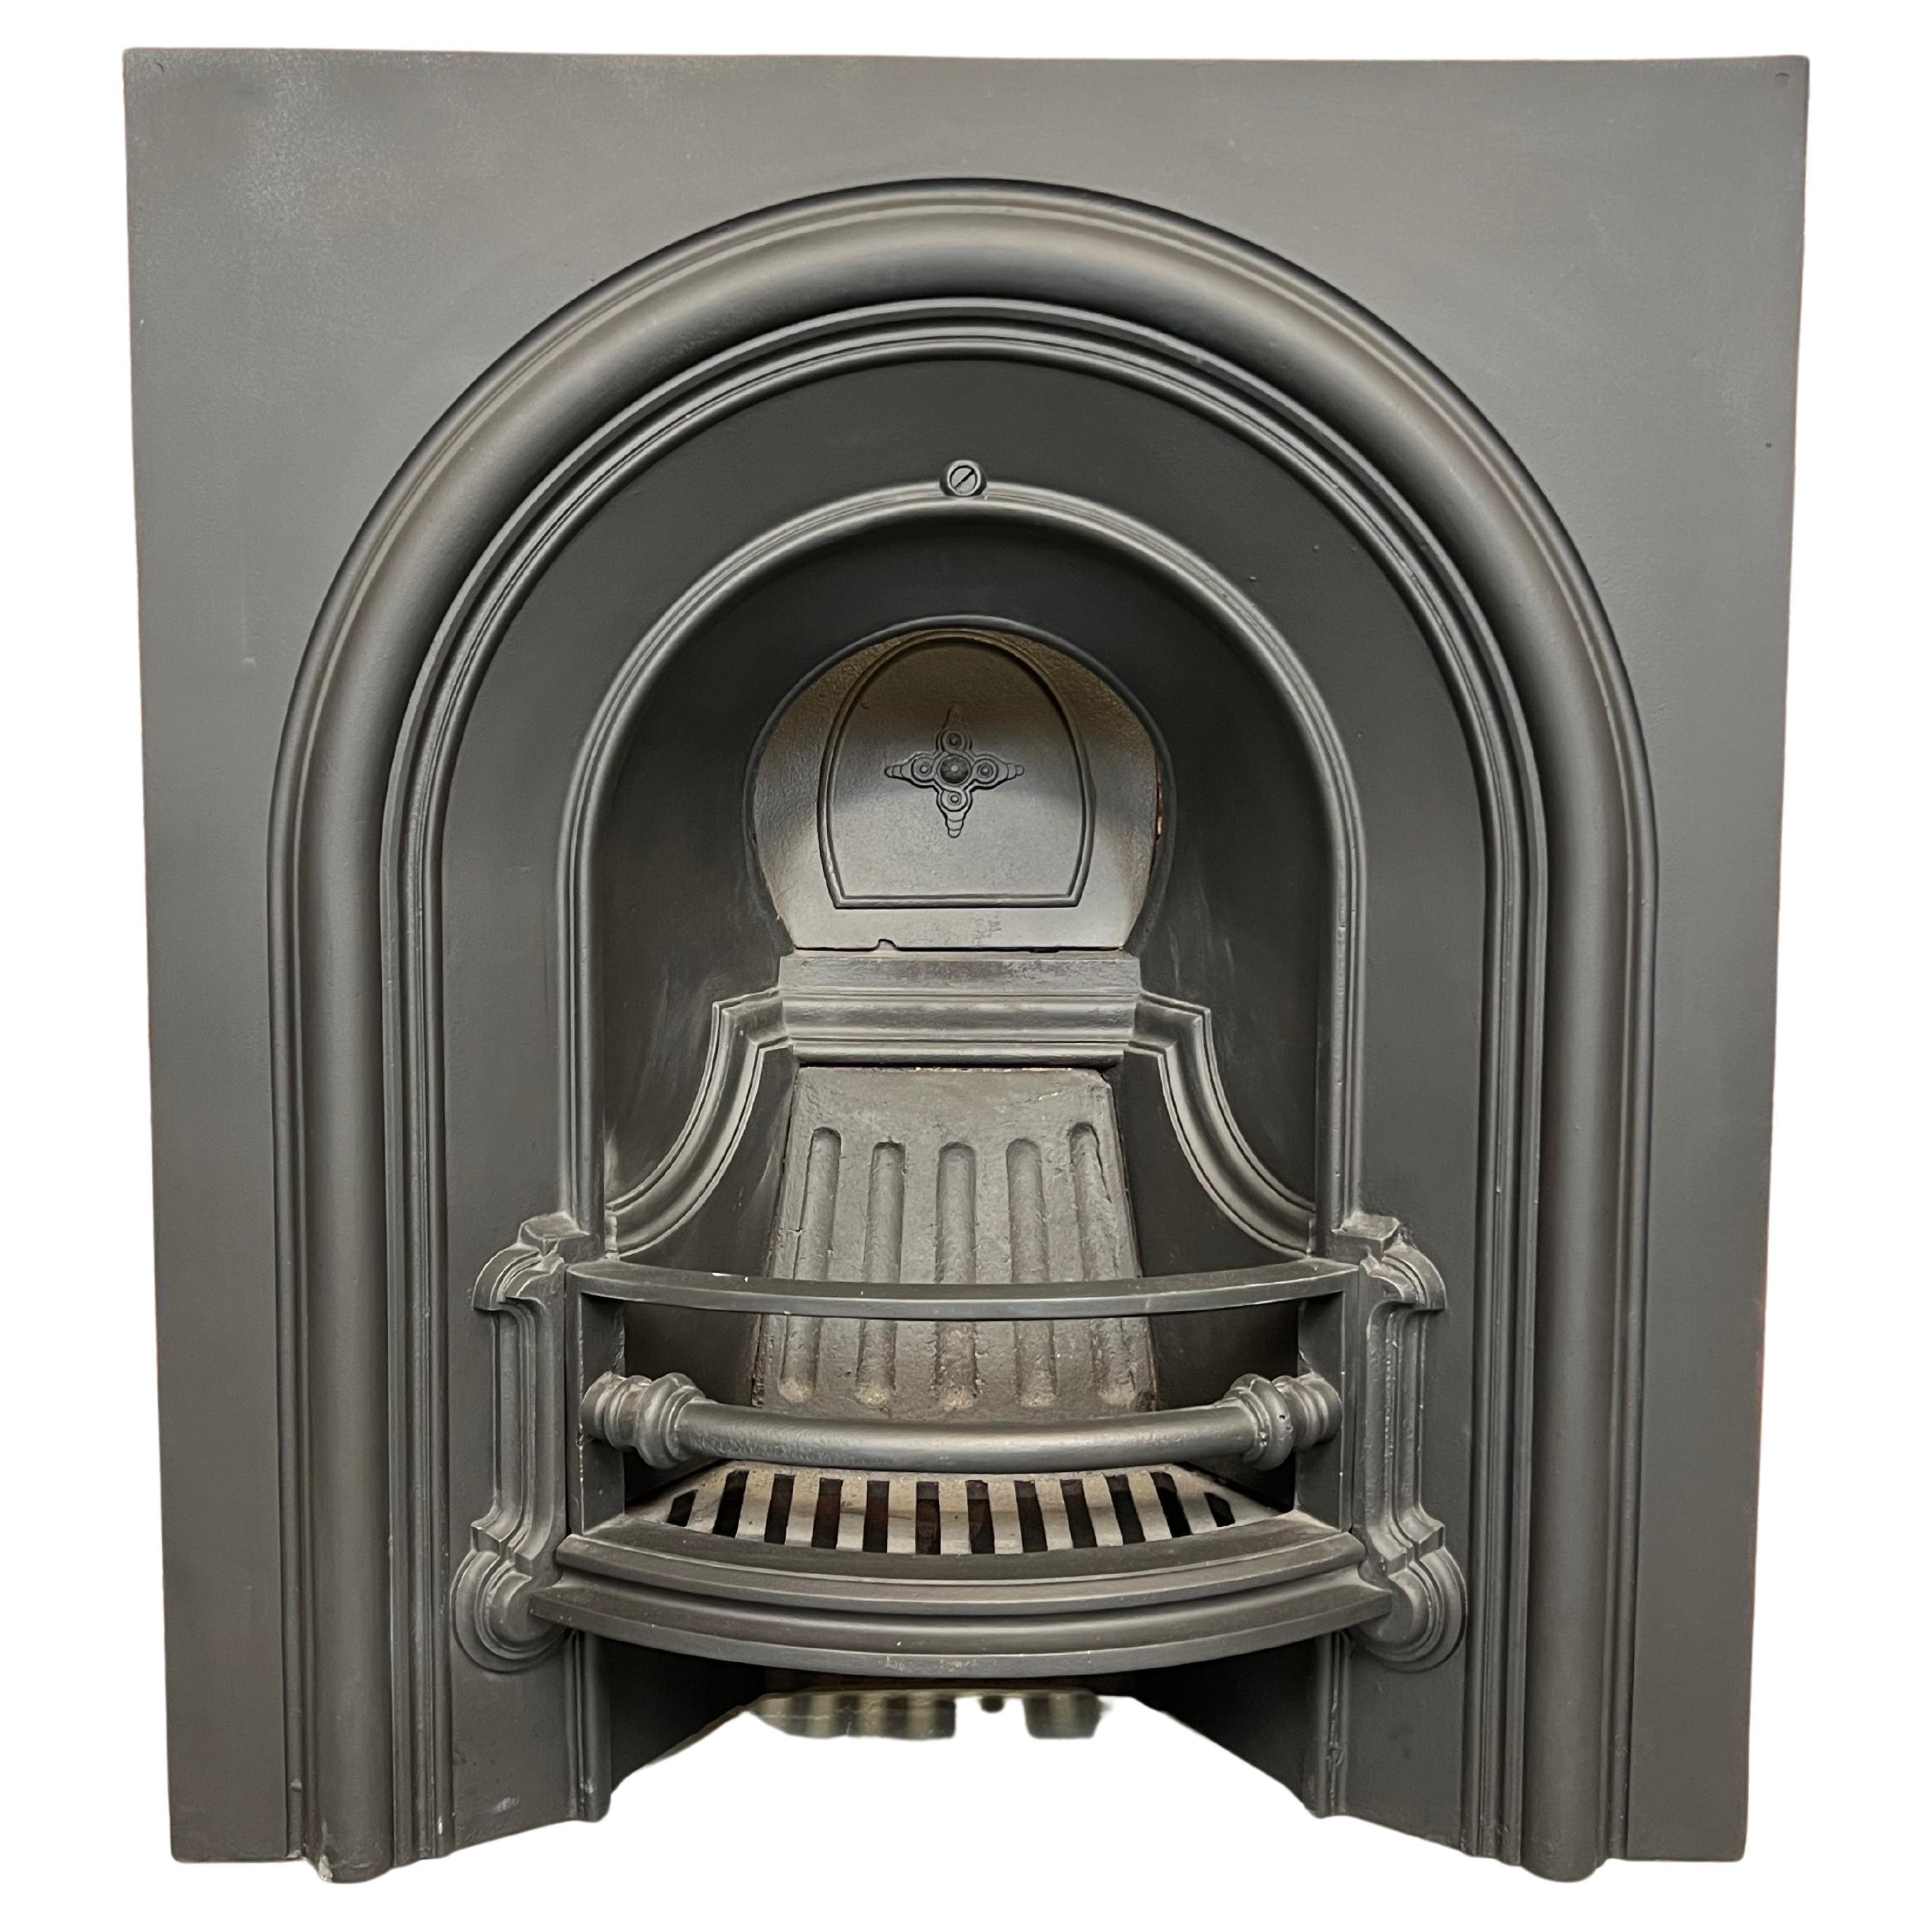 19th Century Cast Iron Fireplace Insert